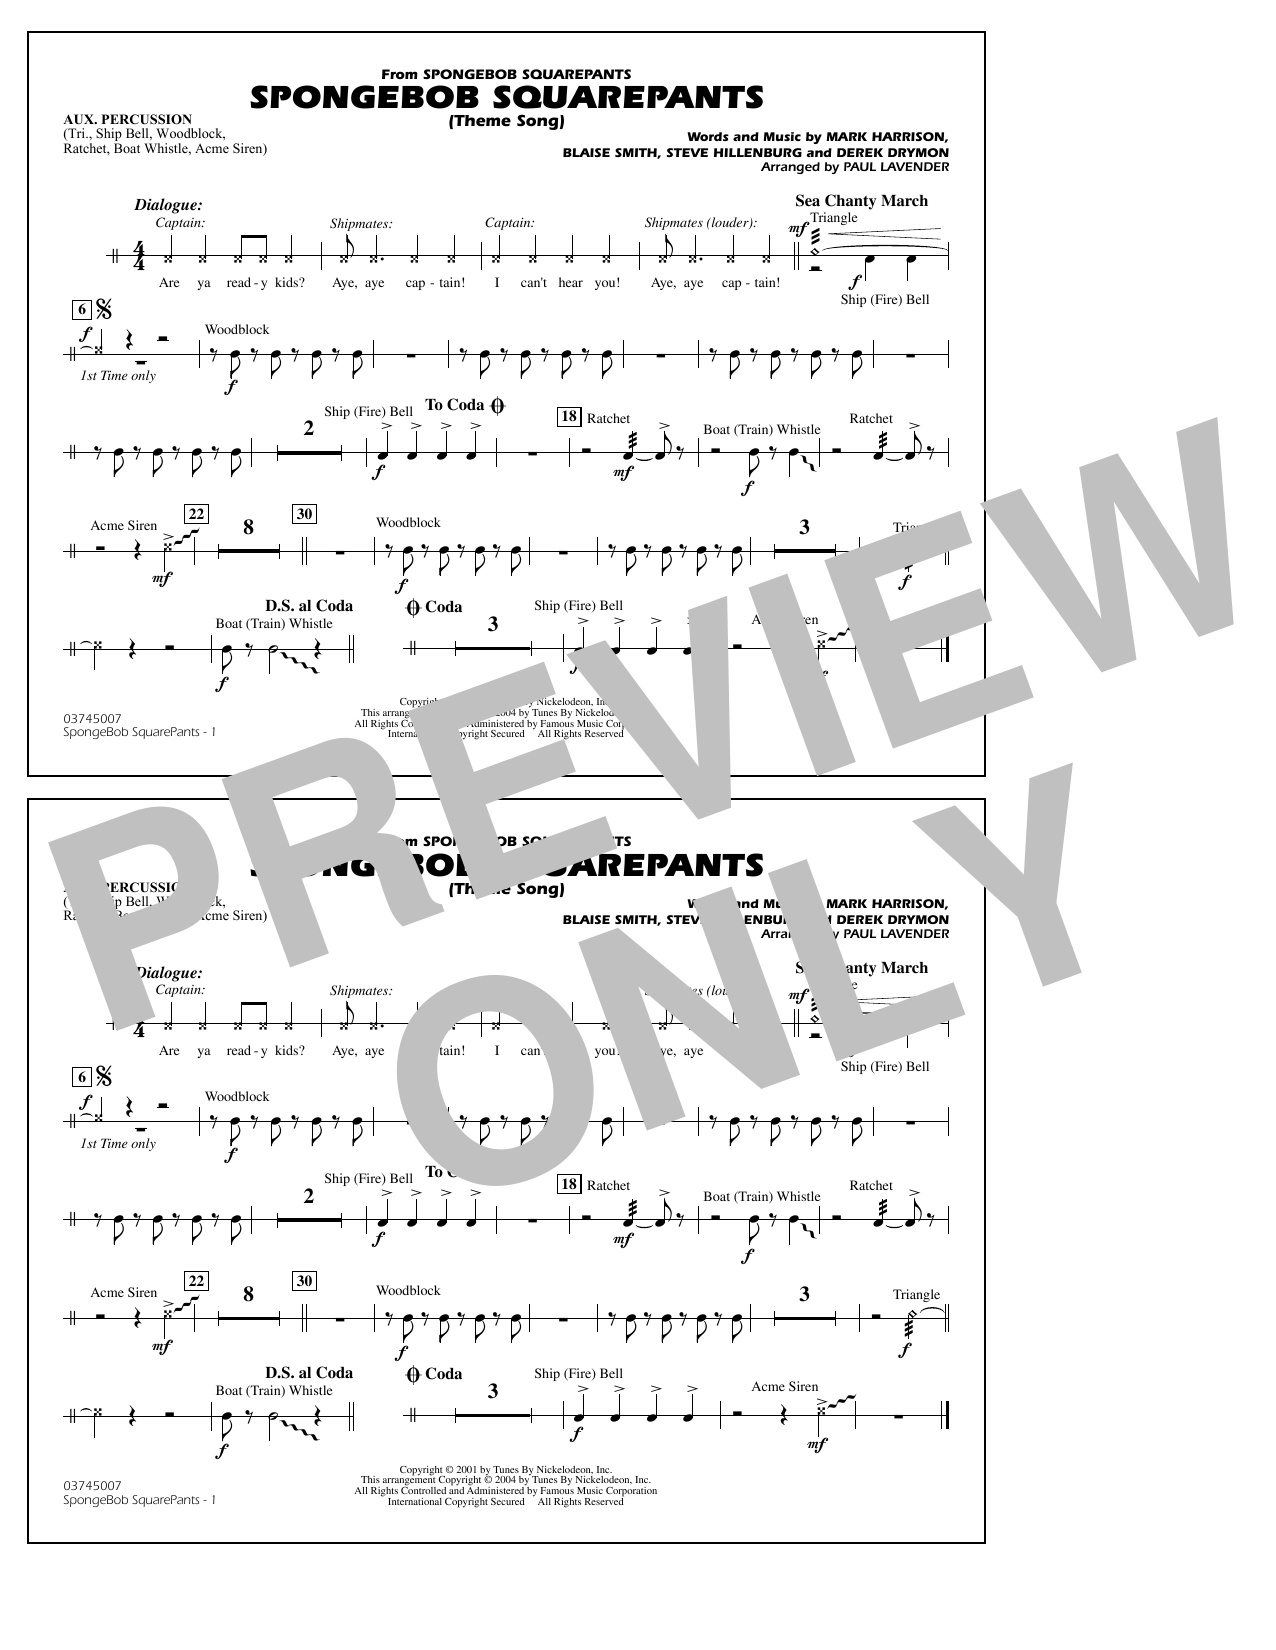 Steve Hillenburg Spongebob Squarepants (Theme Song) (arr. Paul Lavender) - Aux Percussion Sheet Music Notes & Chords for Marching Band - Download or Print PDF